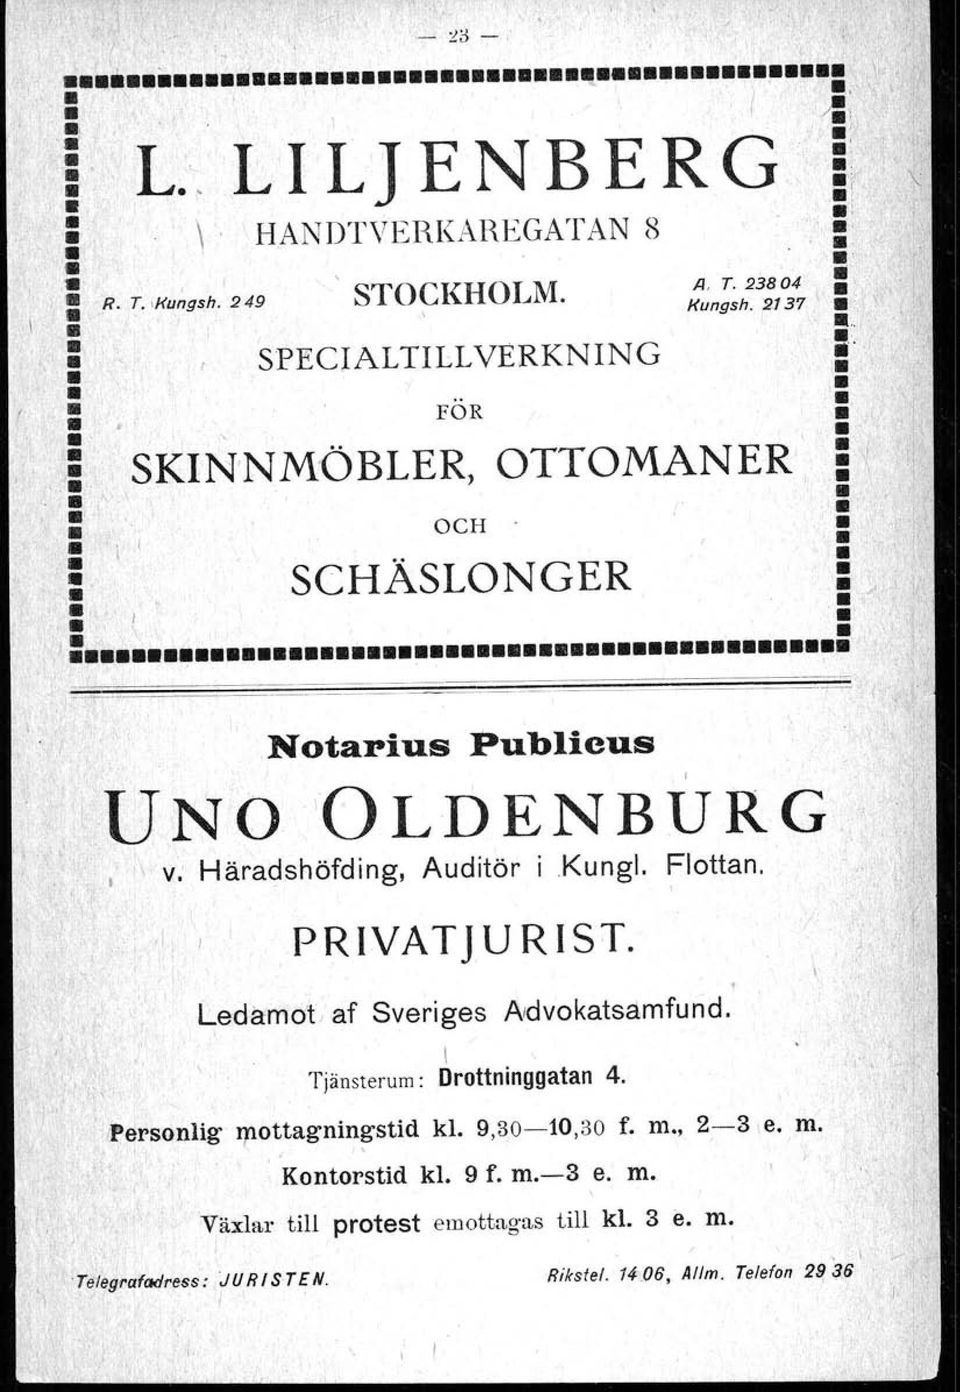 Notapius Publicus 'OLDENBURG Häradshöfding, Auditör i Kungl. Flottan. '~! PRVATJURST. Ledamot, af Sveriges Advokatsamfund.